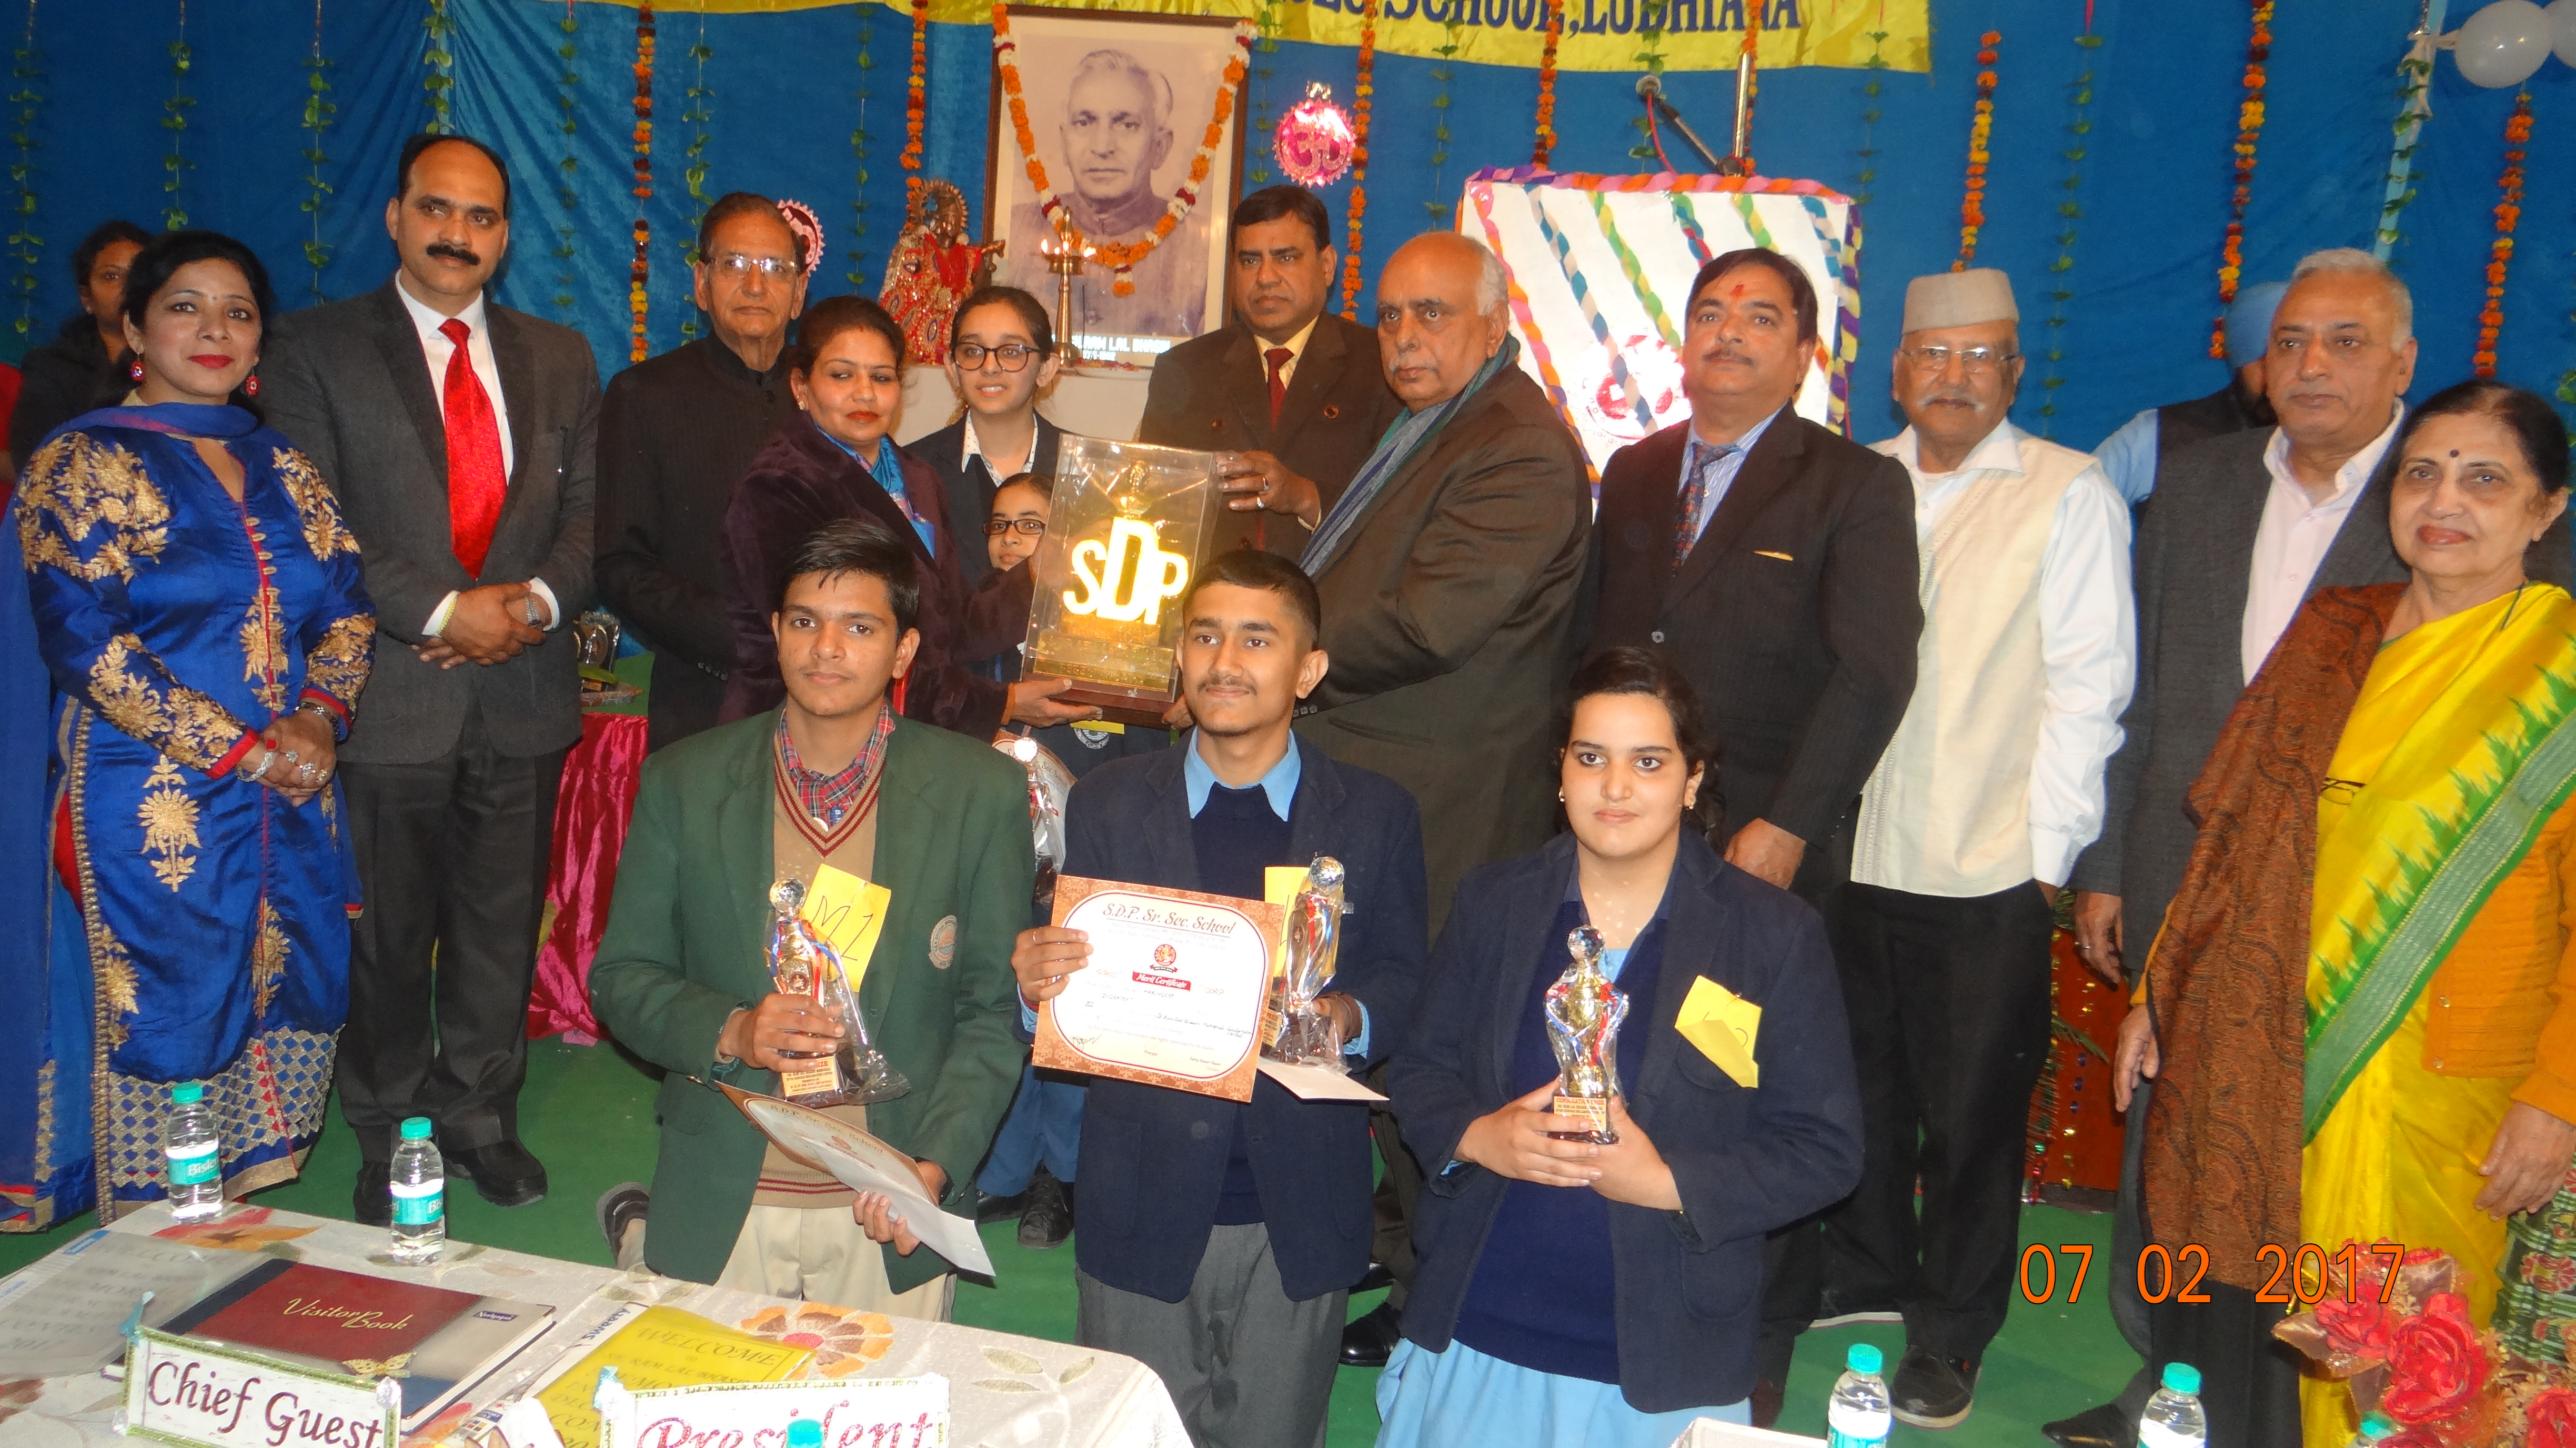 SH RAM LAL BHASIN INTER SCHOOL DECLAMTION CONTEST 